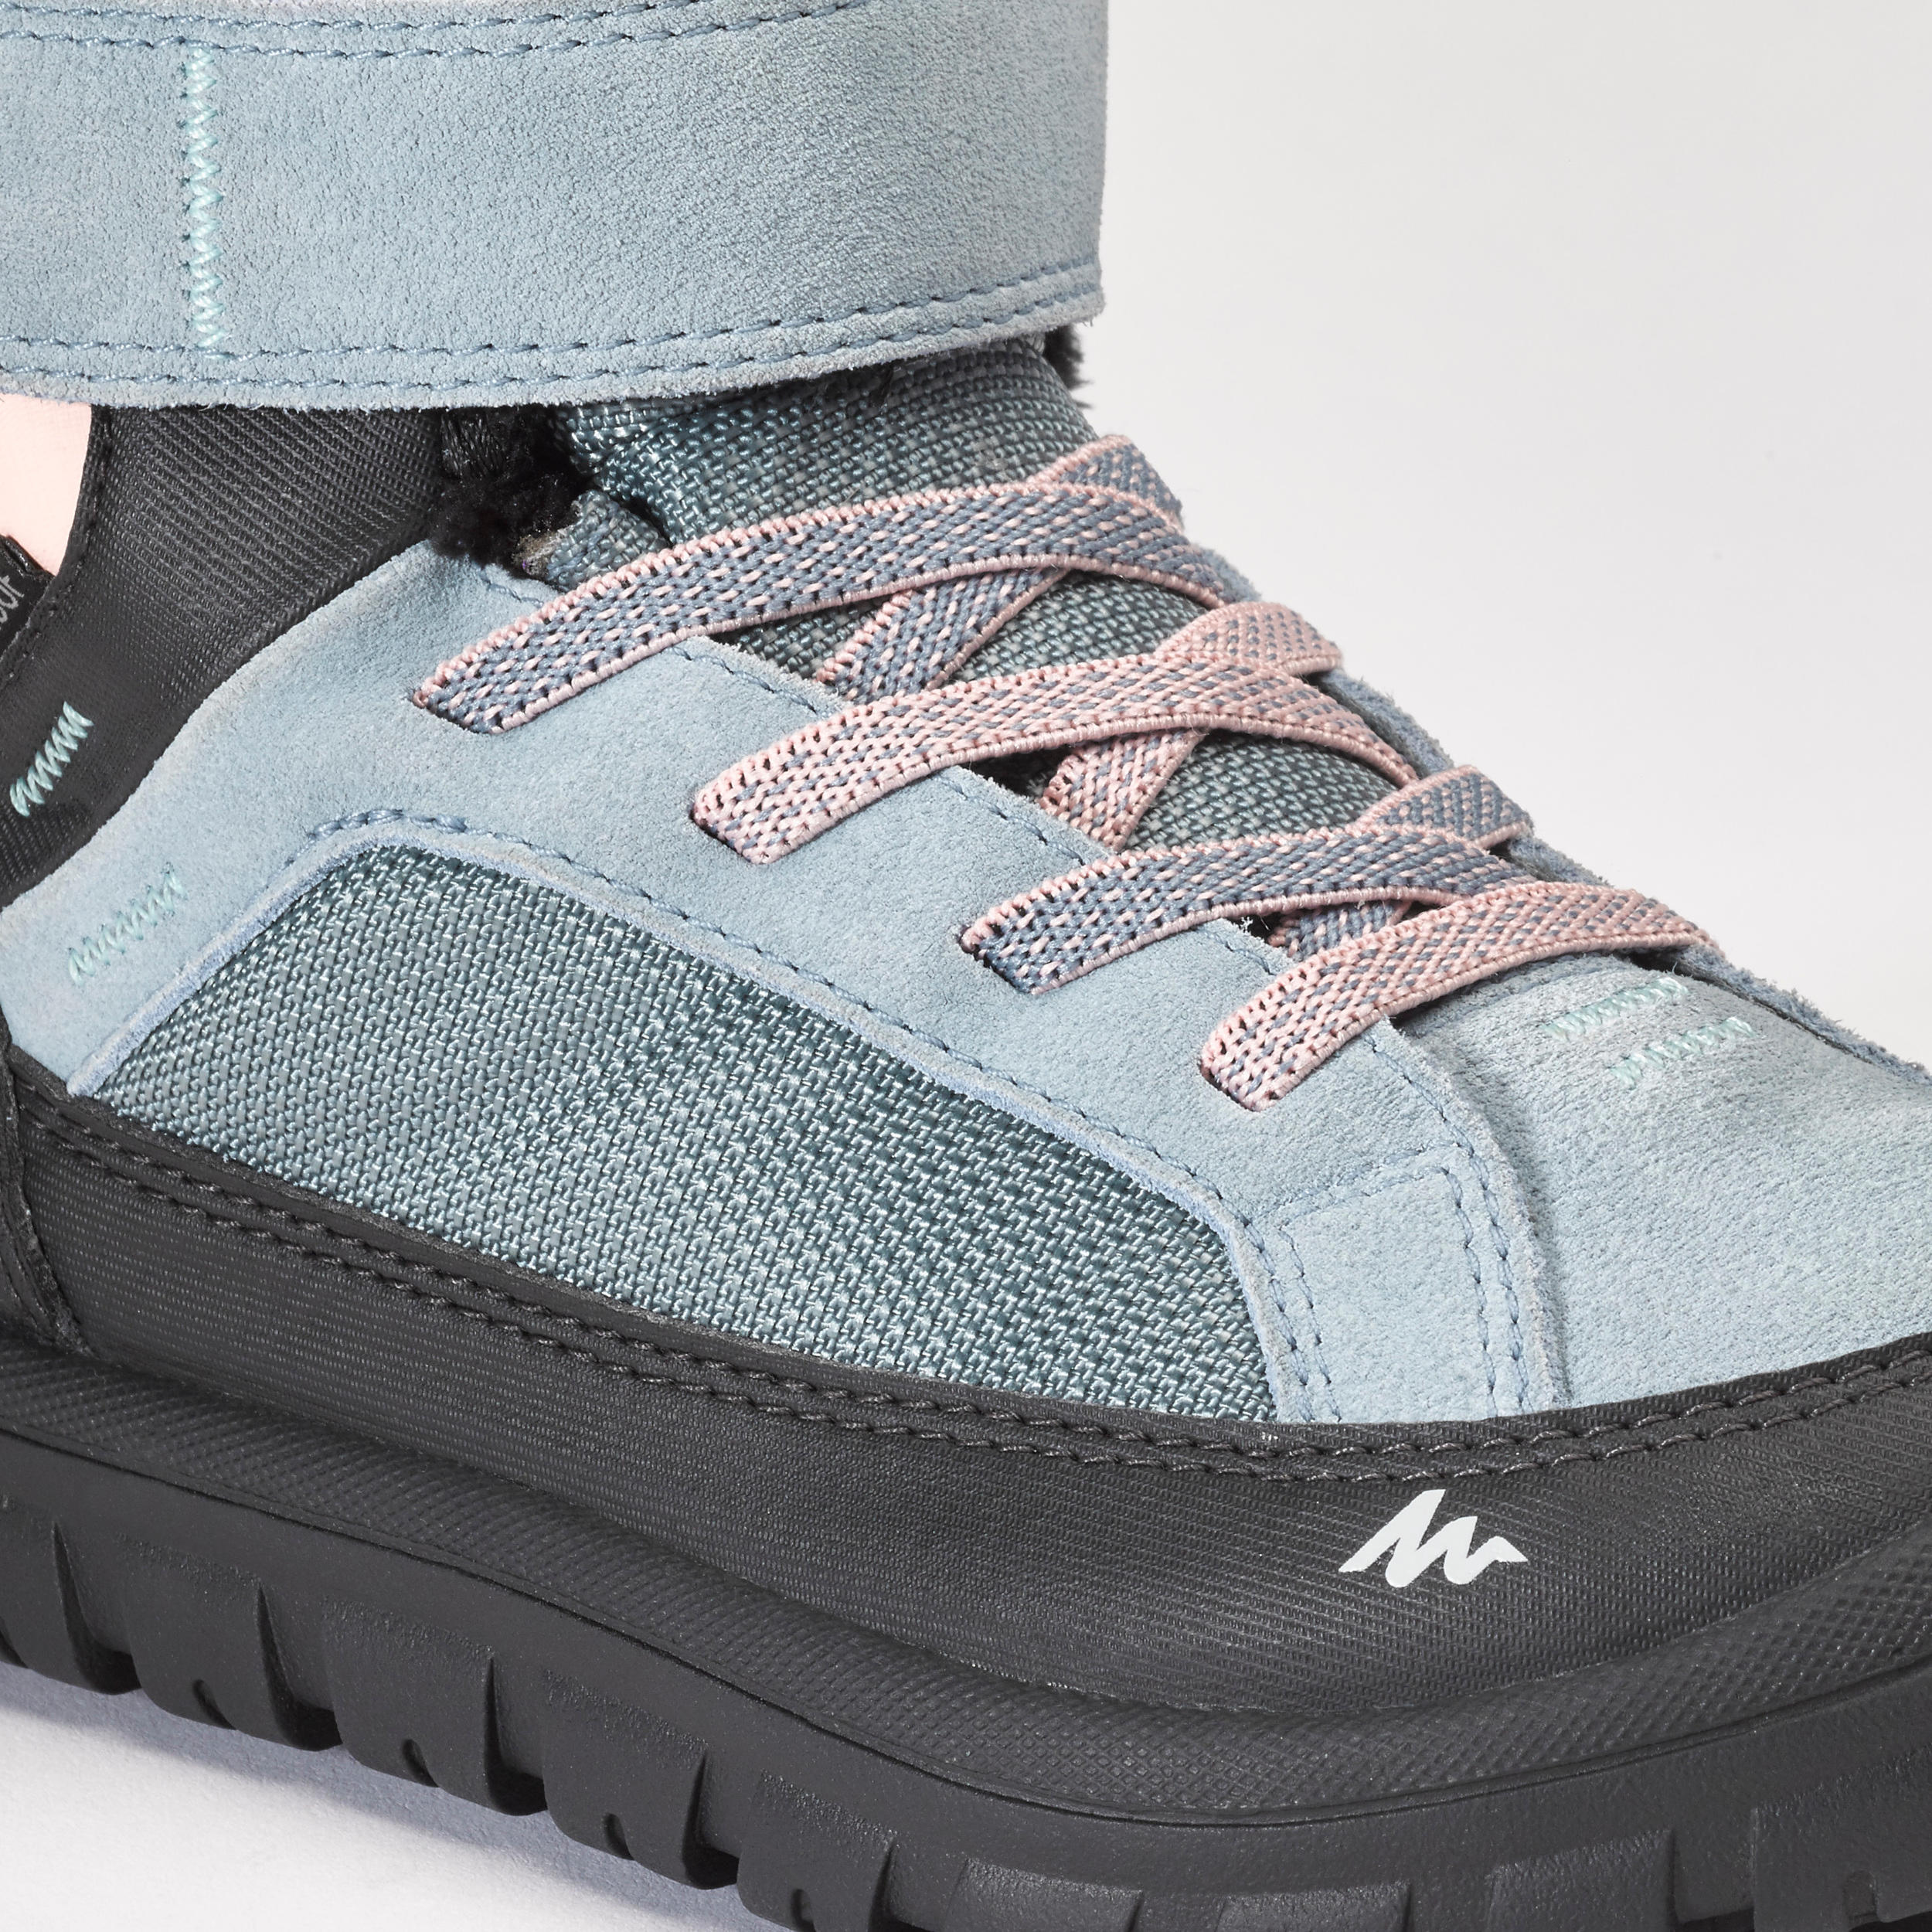 Kids’ Warm Waterproof Hiking Boots SH500 Warm Riptab Size 10 - 13.5 4/5